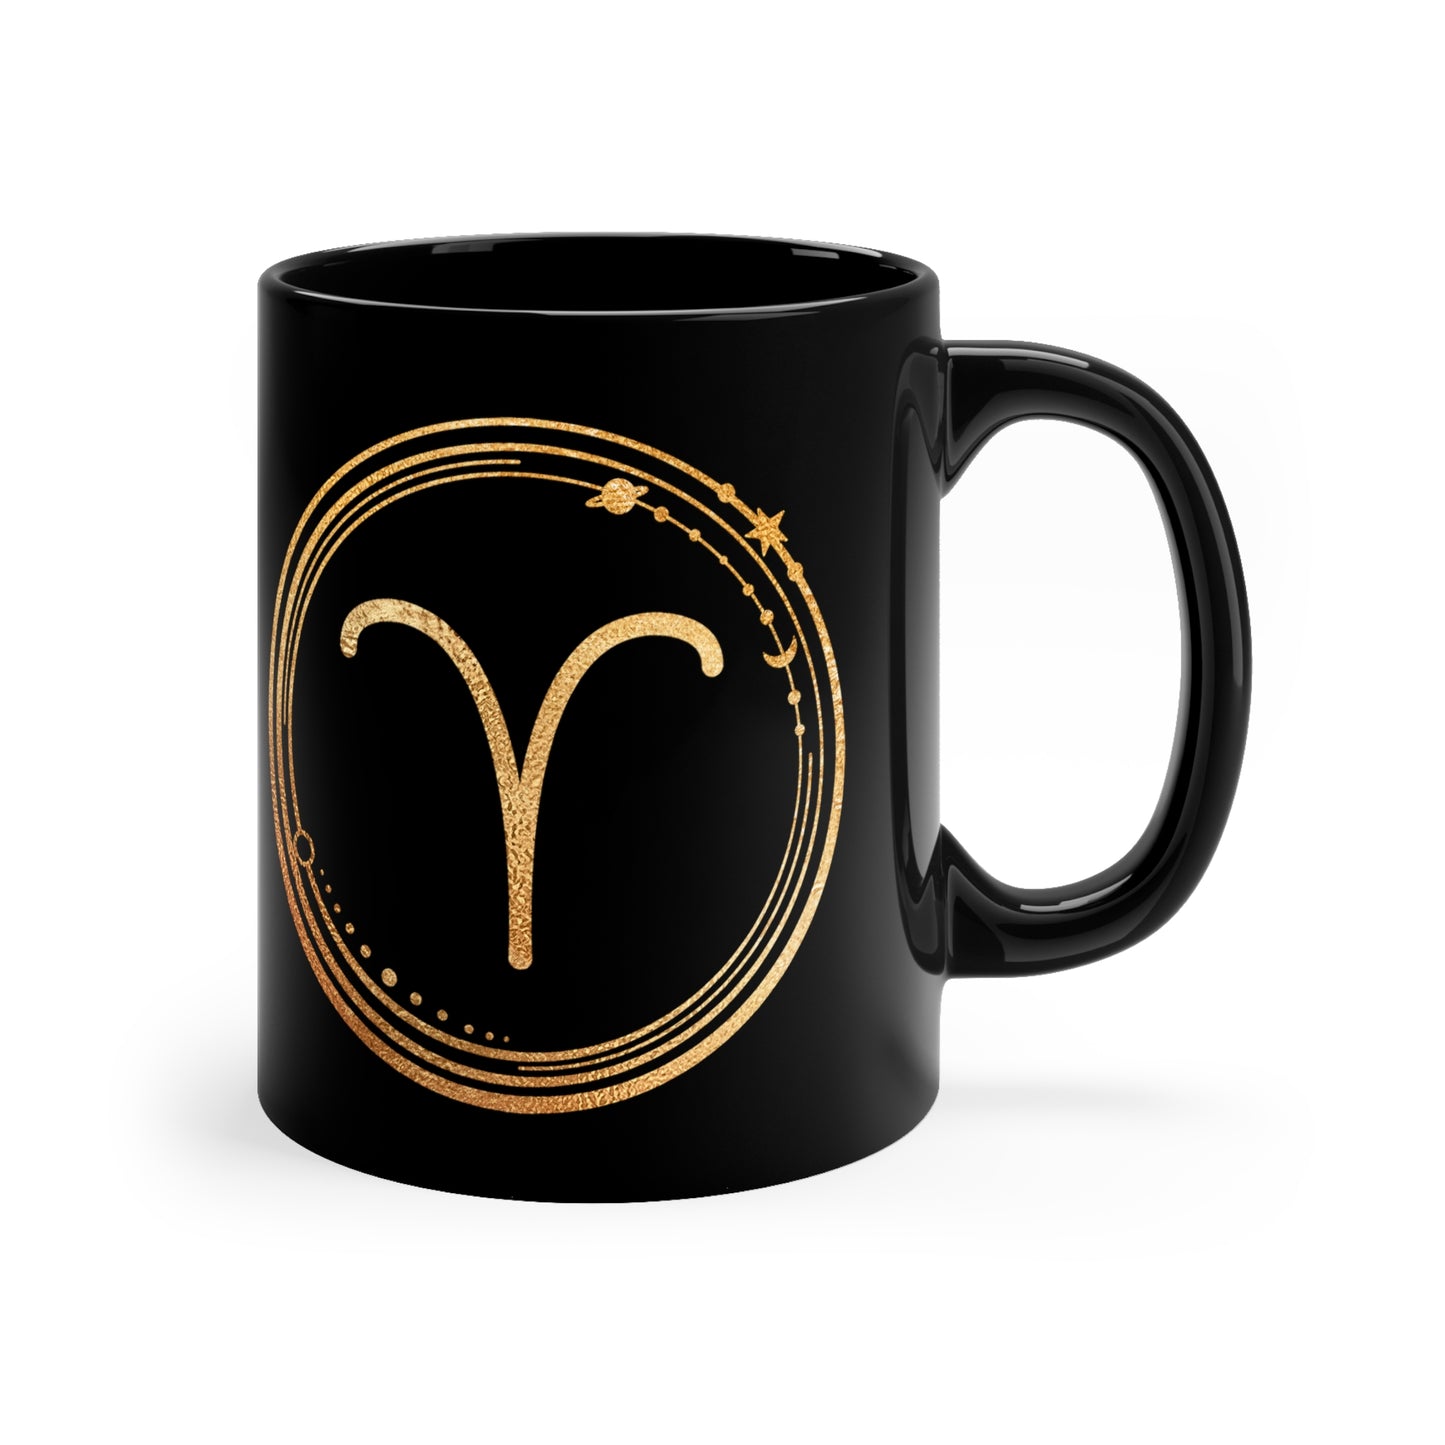 Aries Mug - 11oz Black Mug with constellation and astrological symbol of the star sign Aries